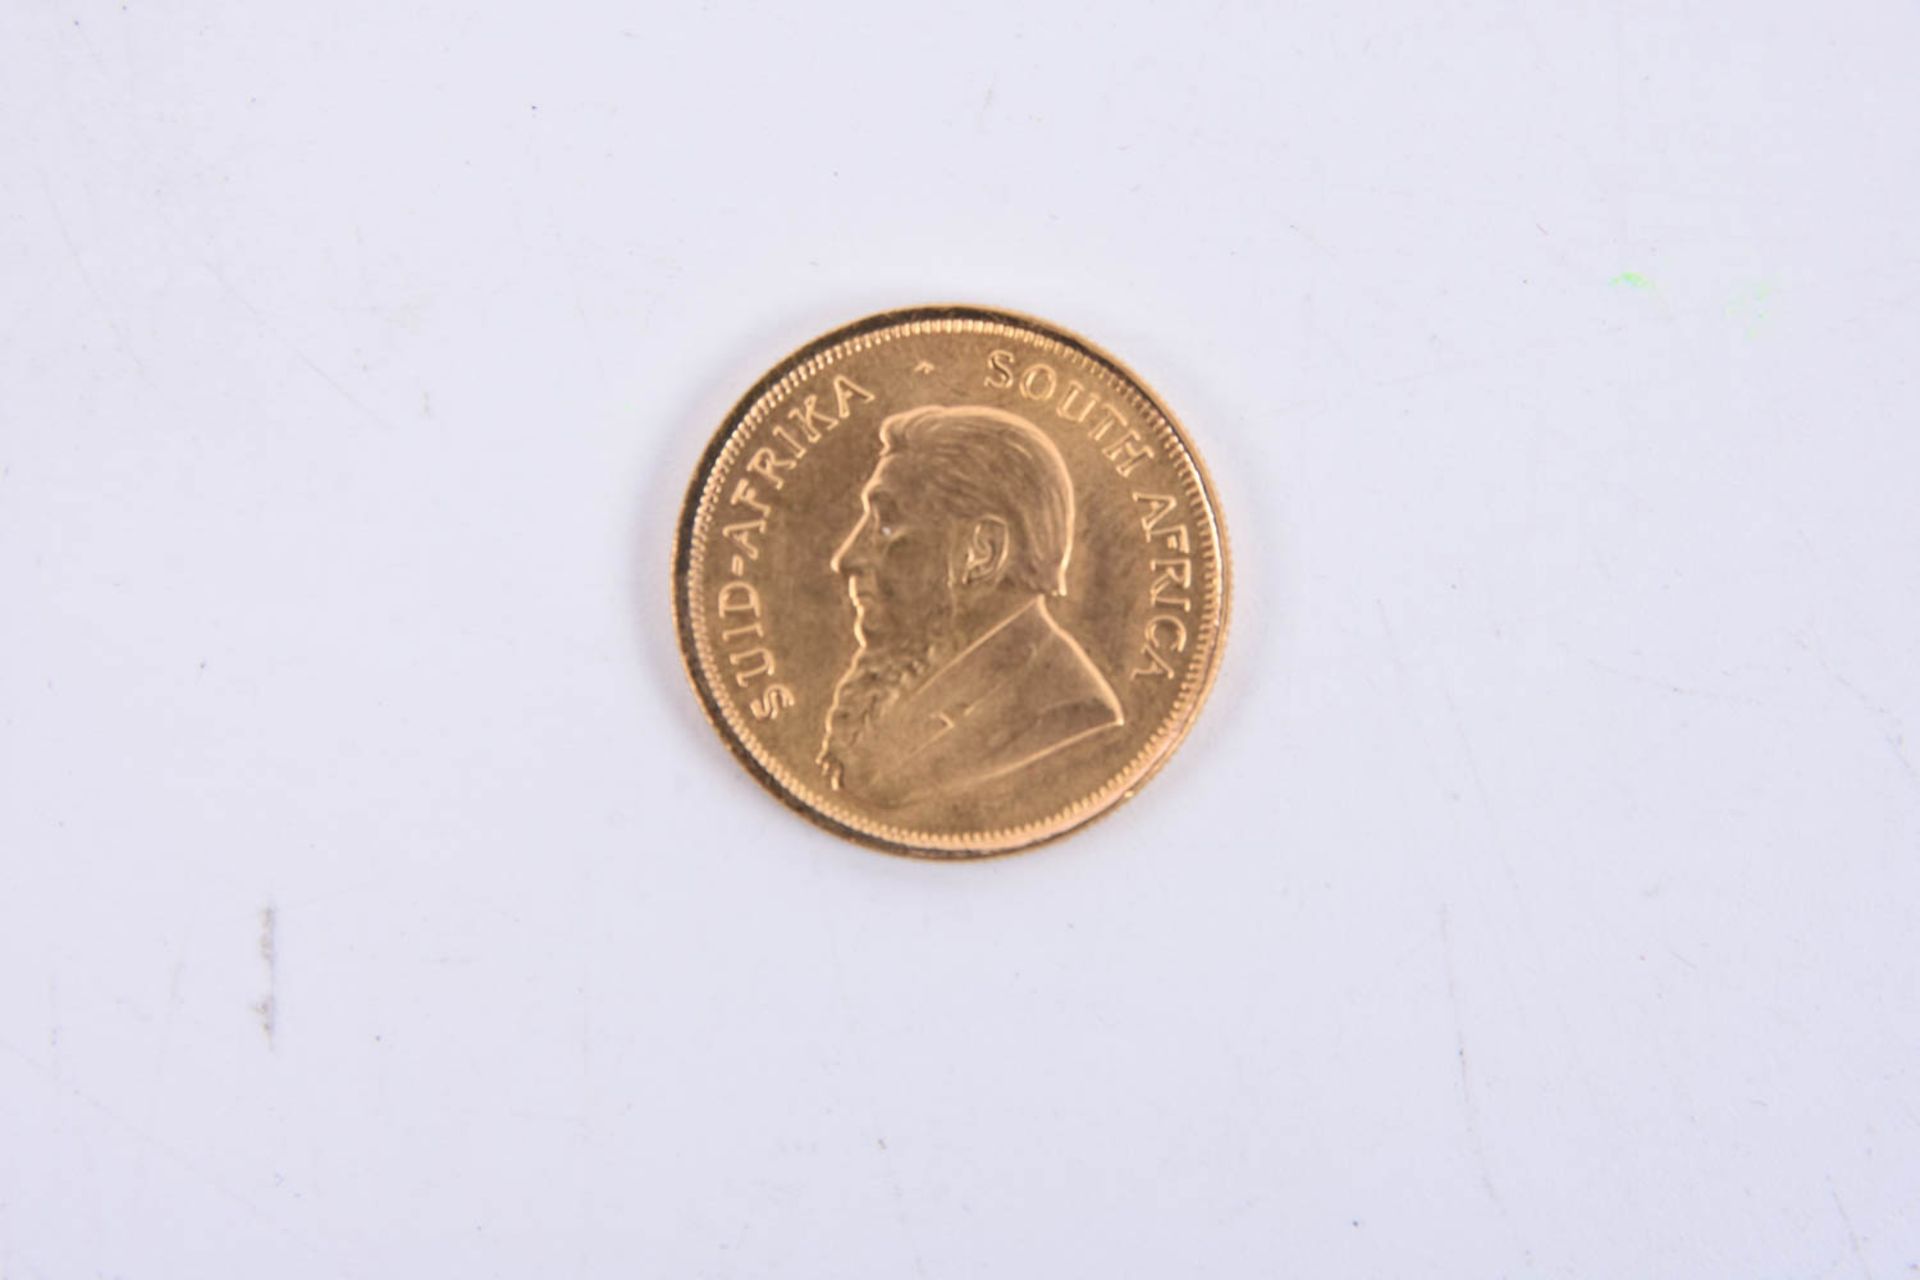 Südafrika ¼ Krügerrand, 1984 Goldmünze - Bild 2 aus 3